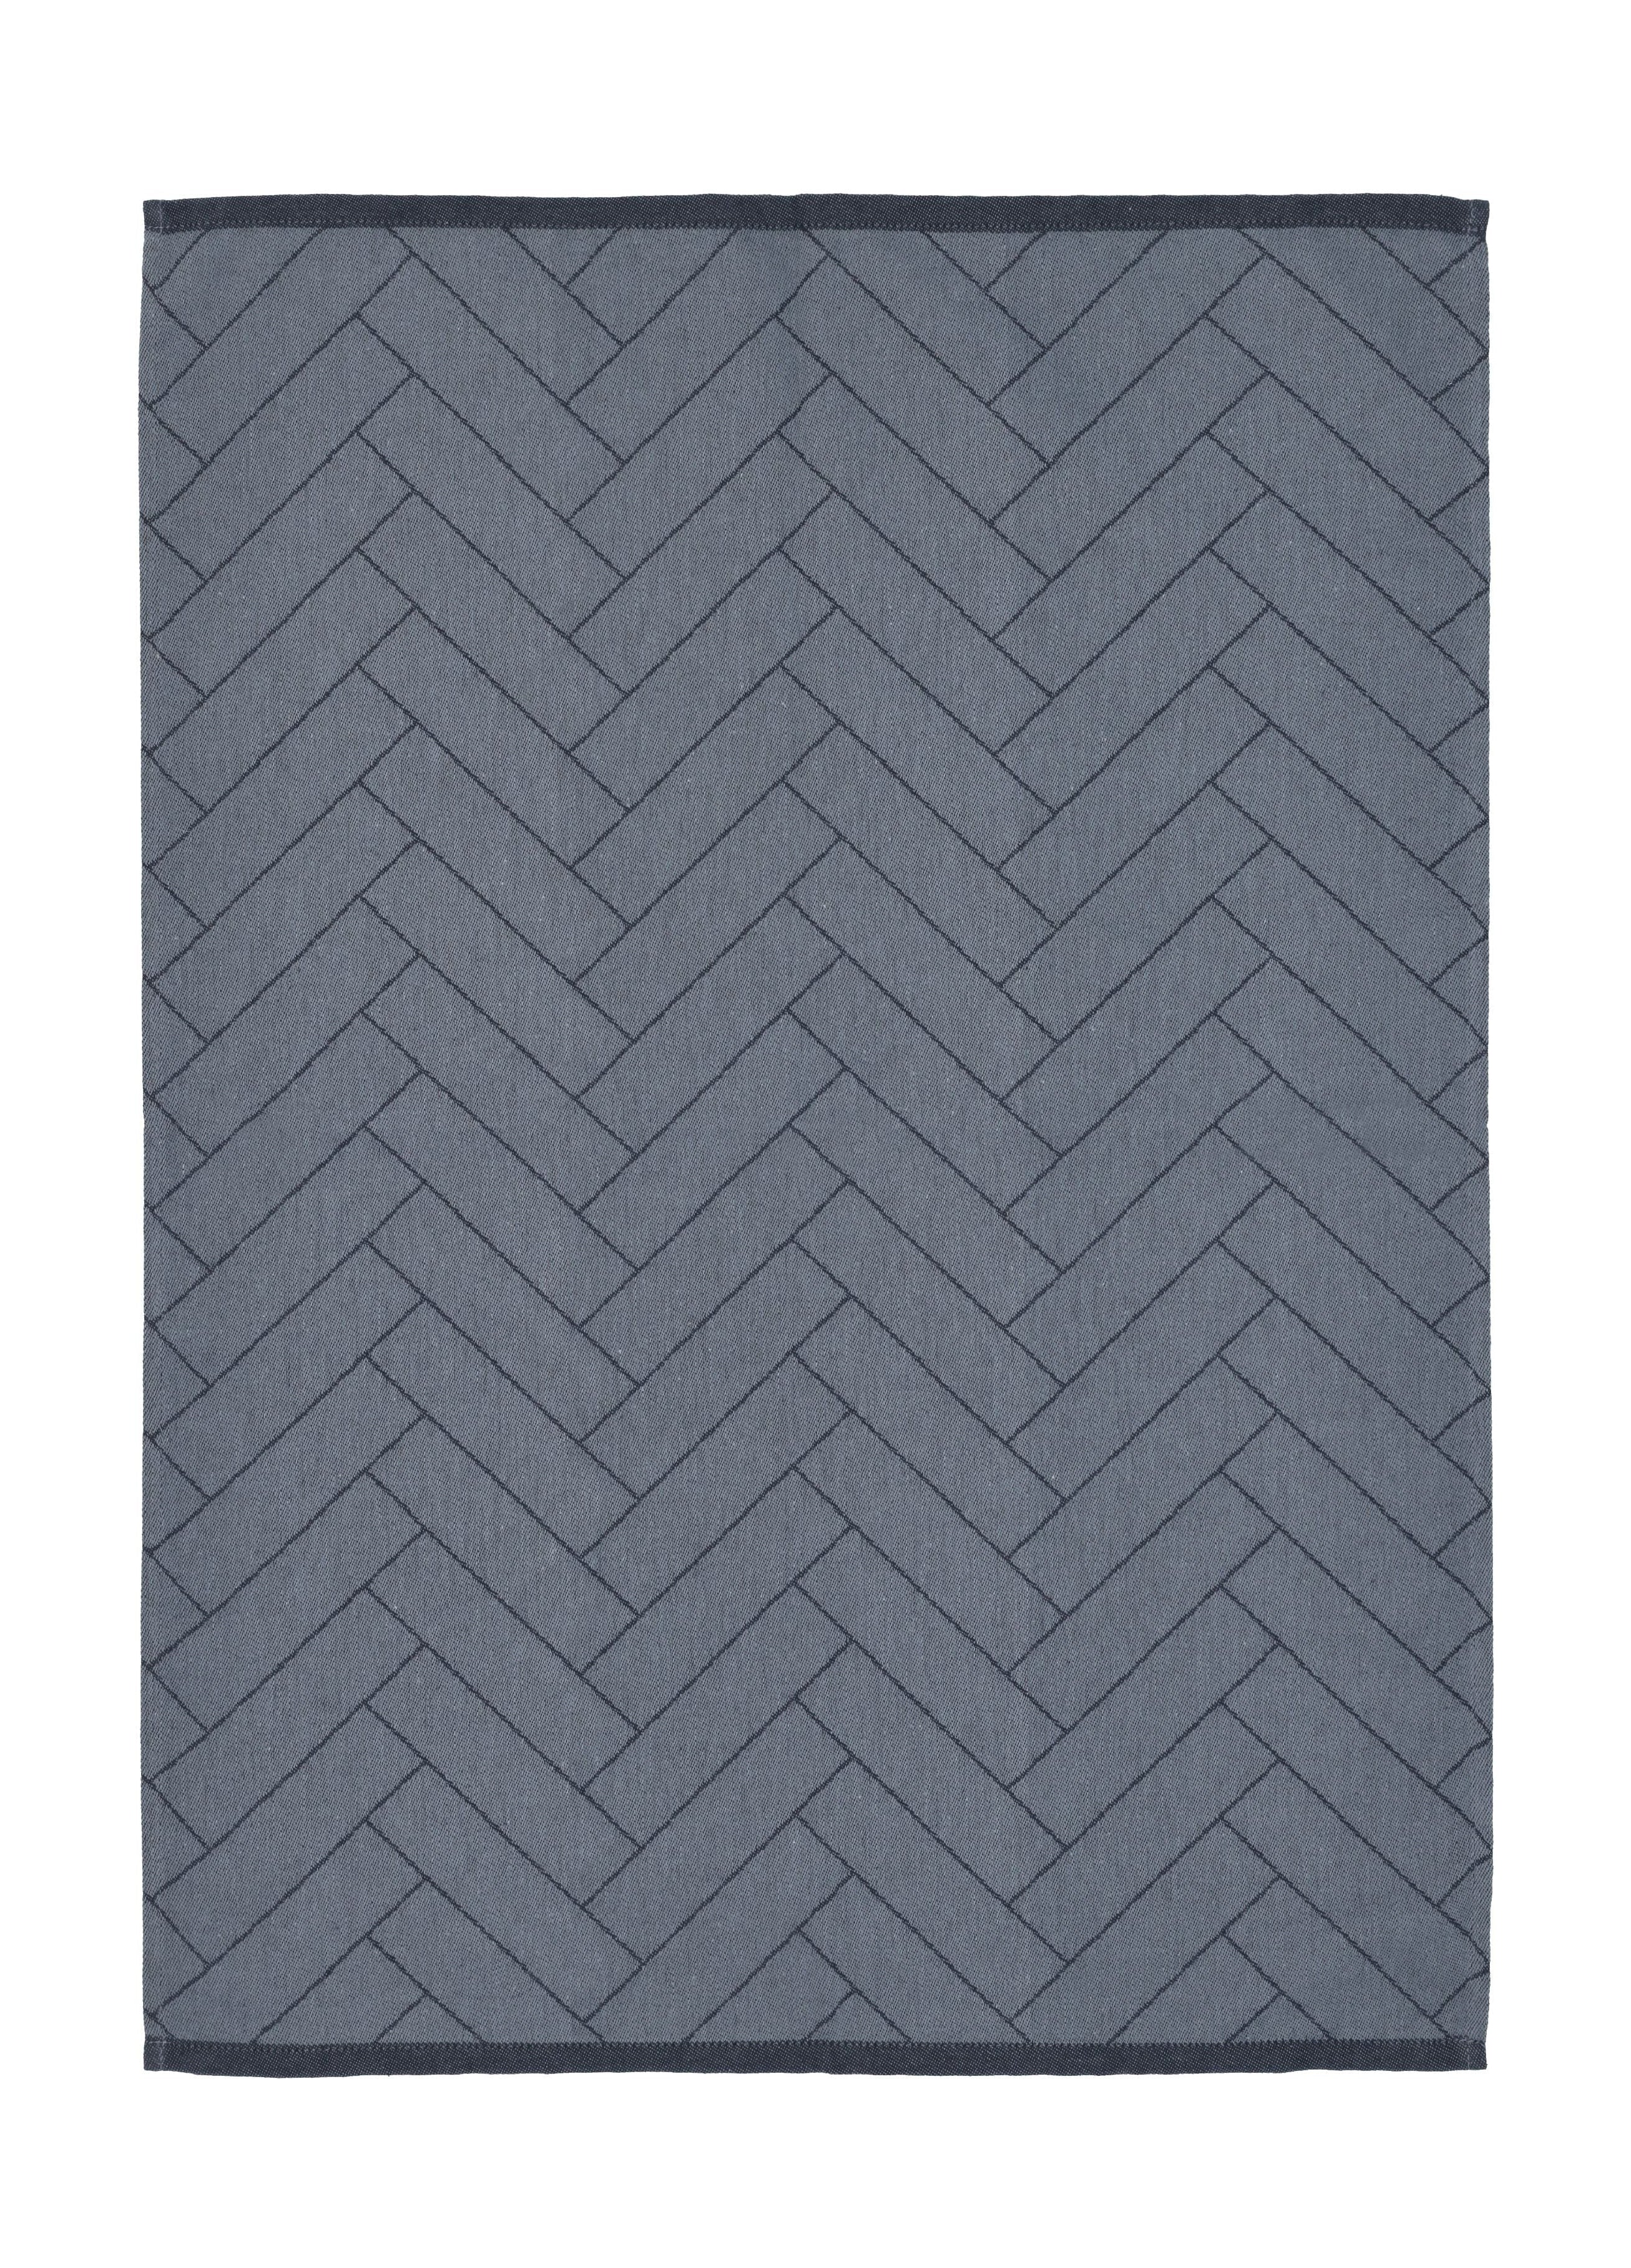 Södahl Tiles pro čajový ručník 50x70 cm, indigo